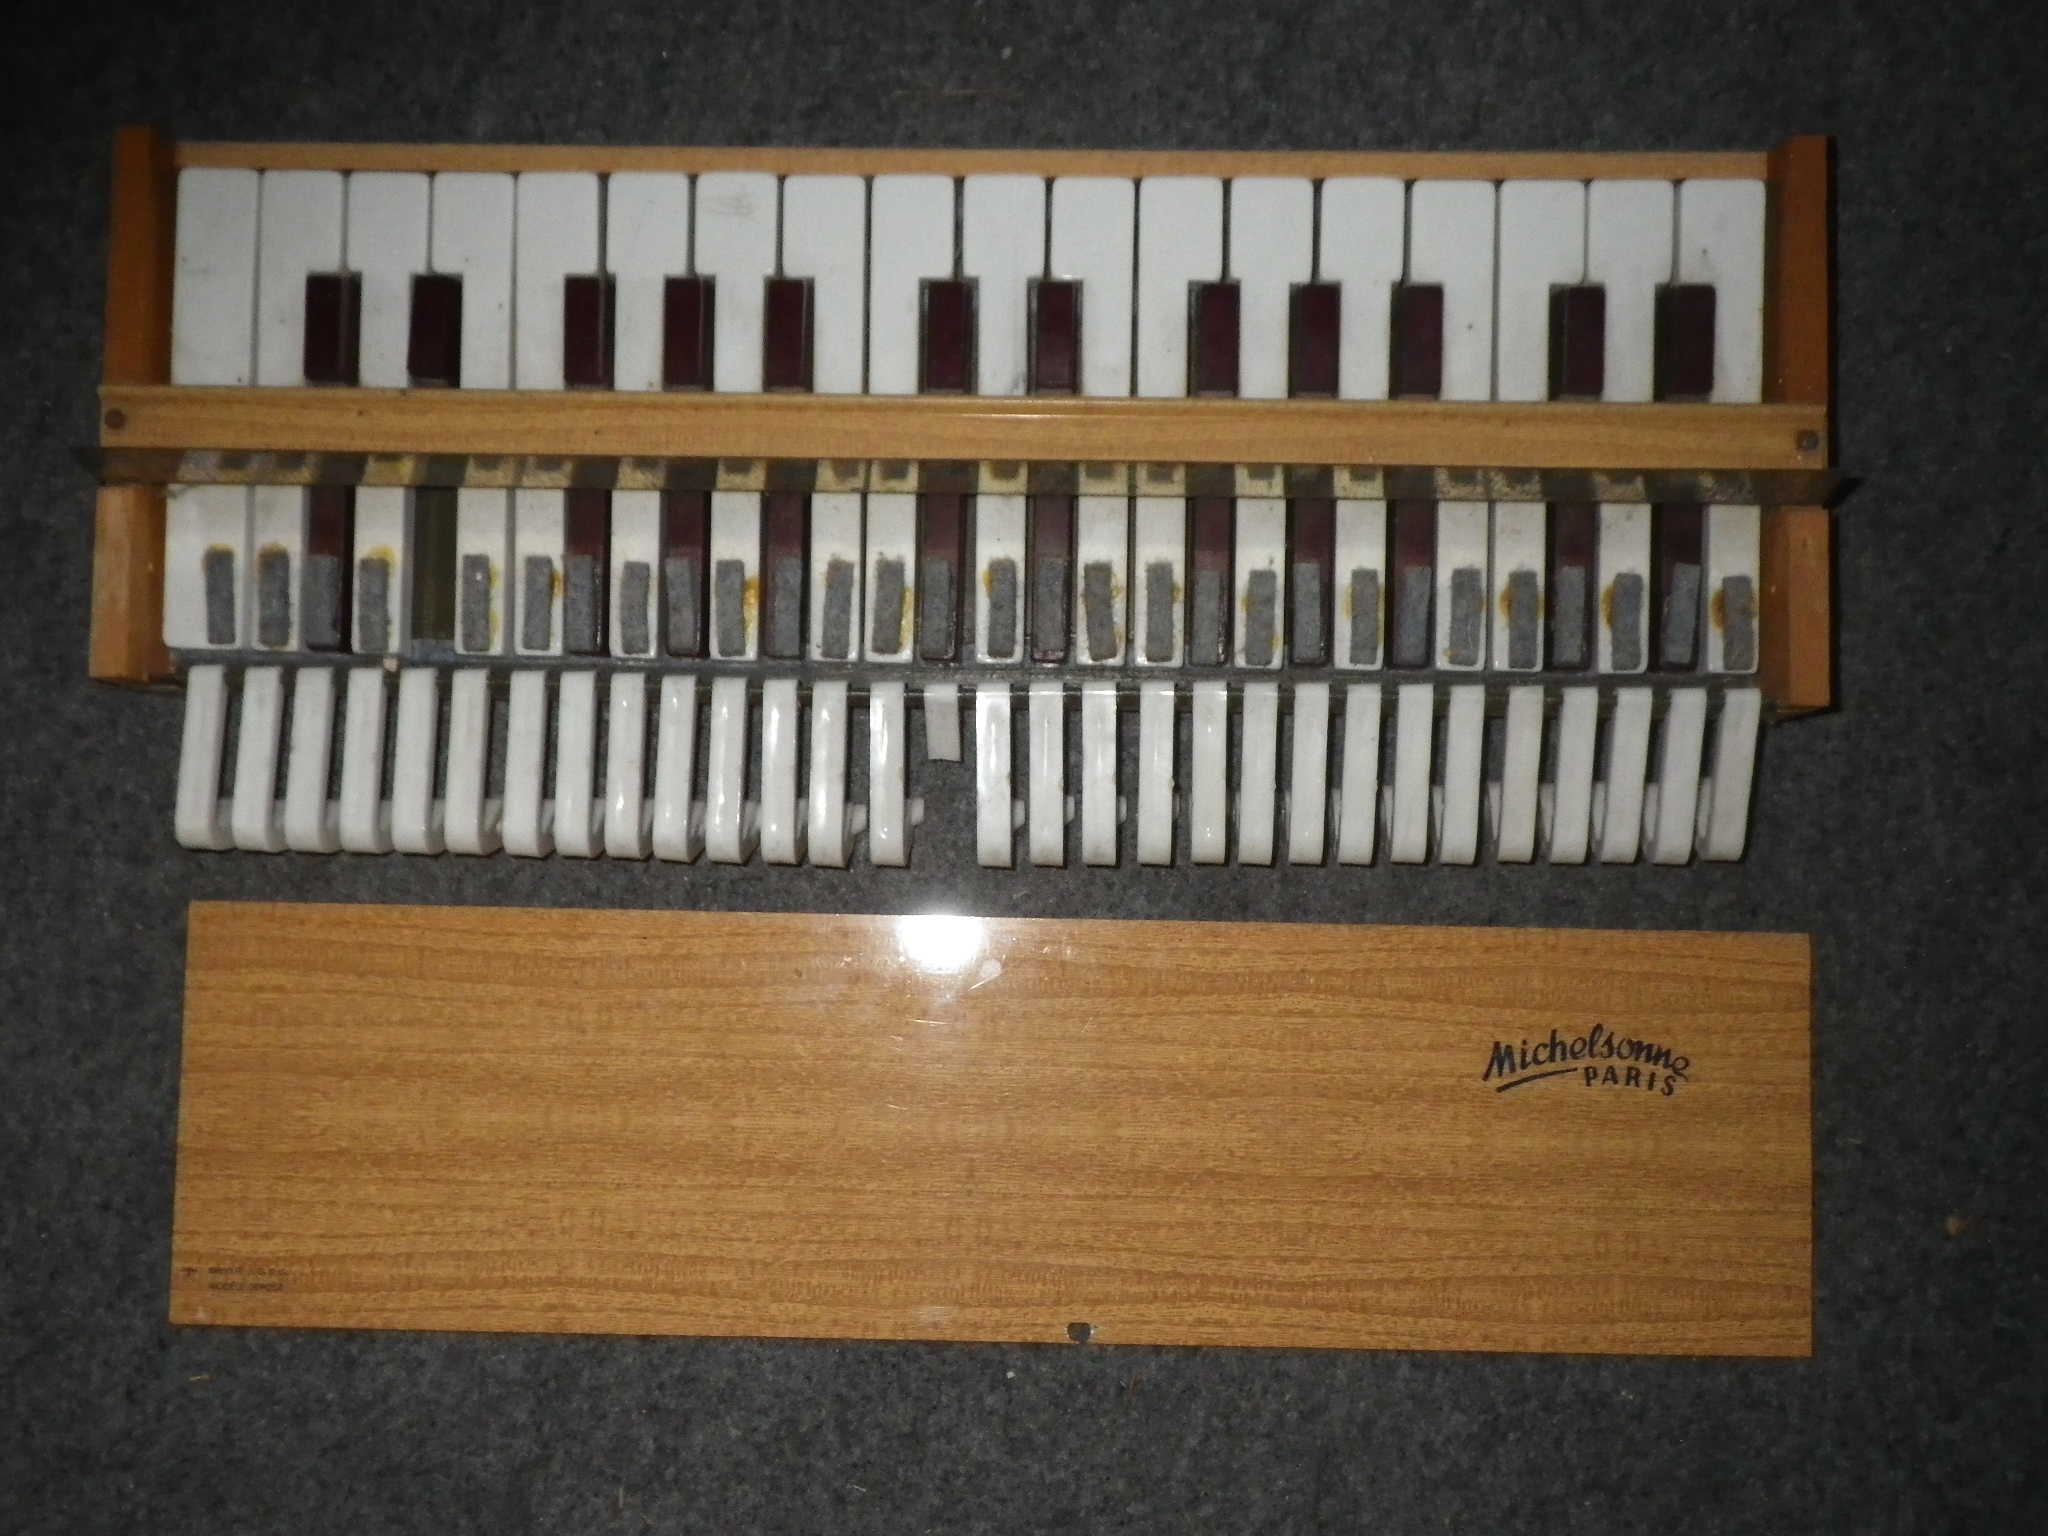 michelsonne-paris-toy-piano-30-keys-2504680.jpg